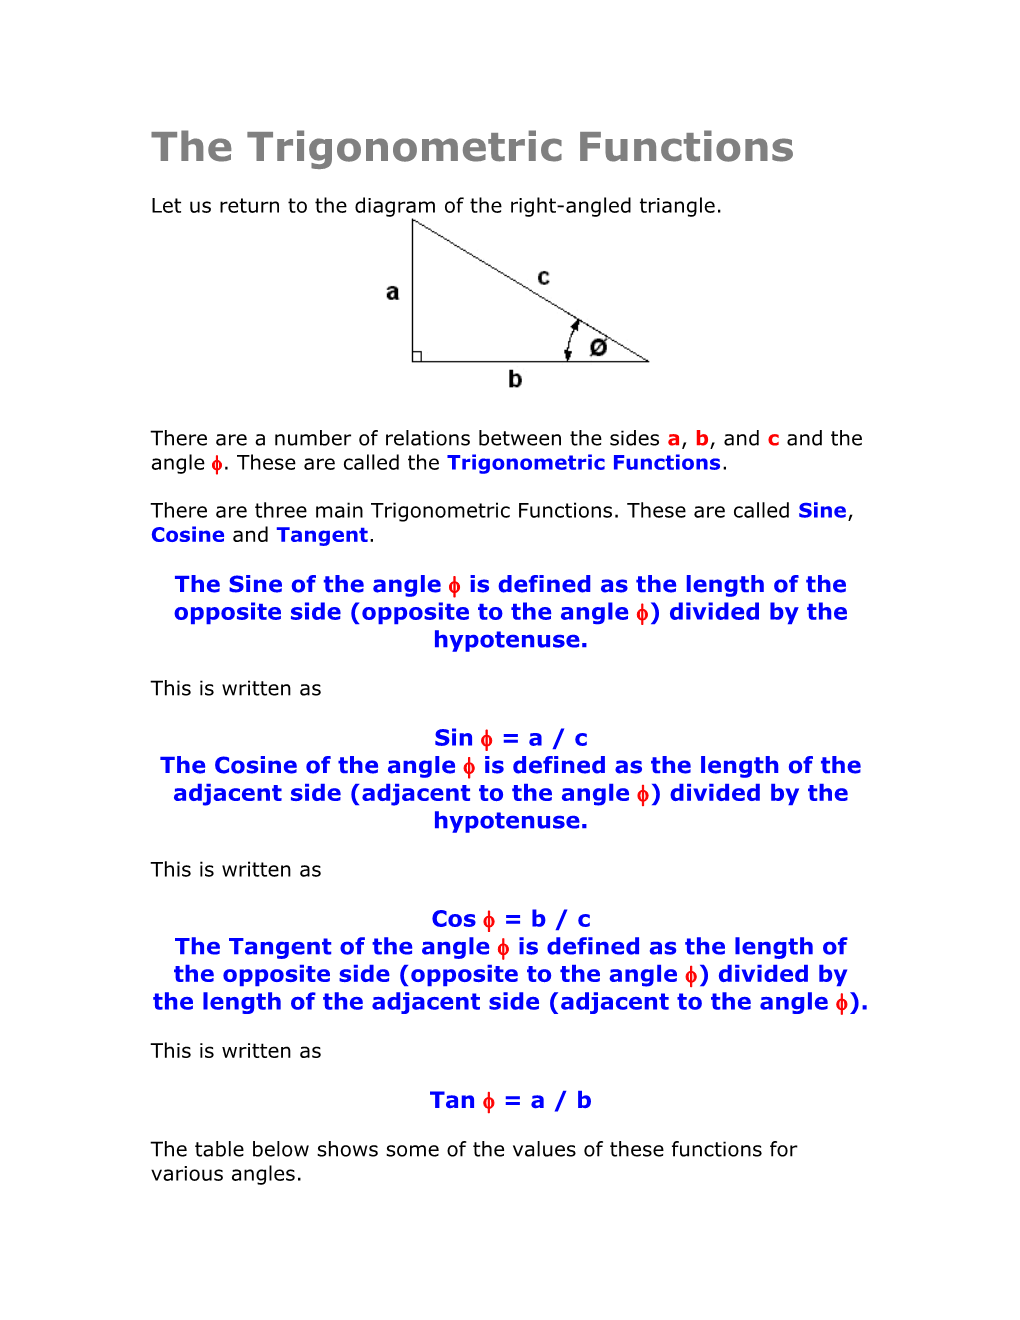 The Trigonometric Functions